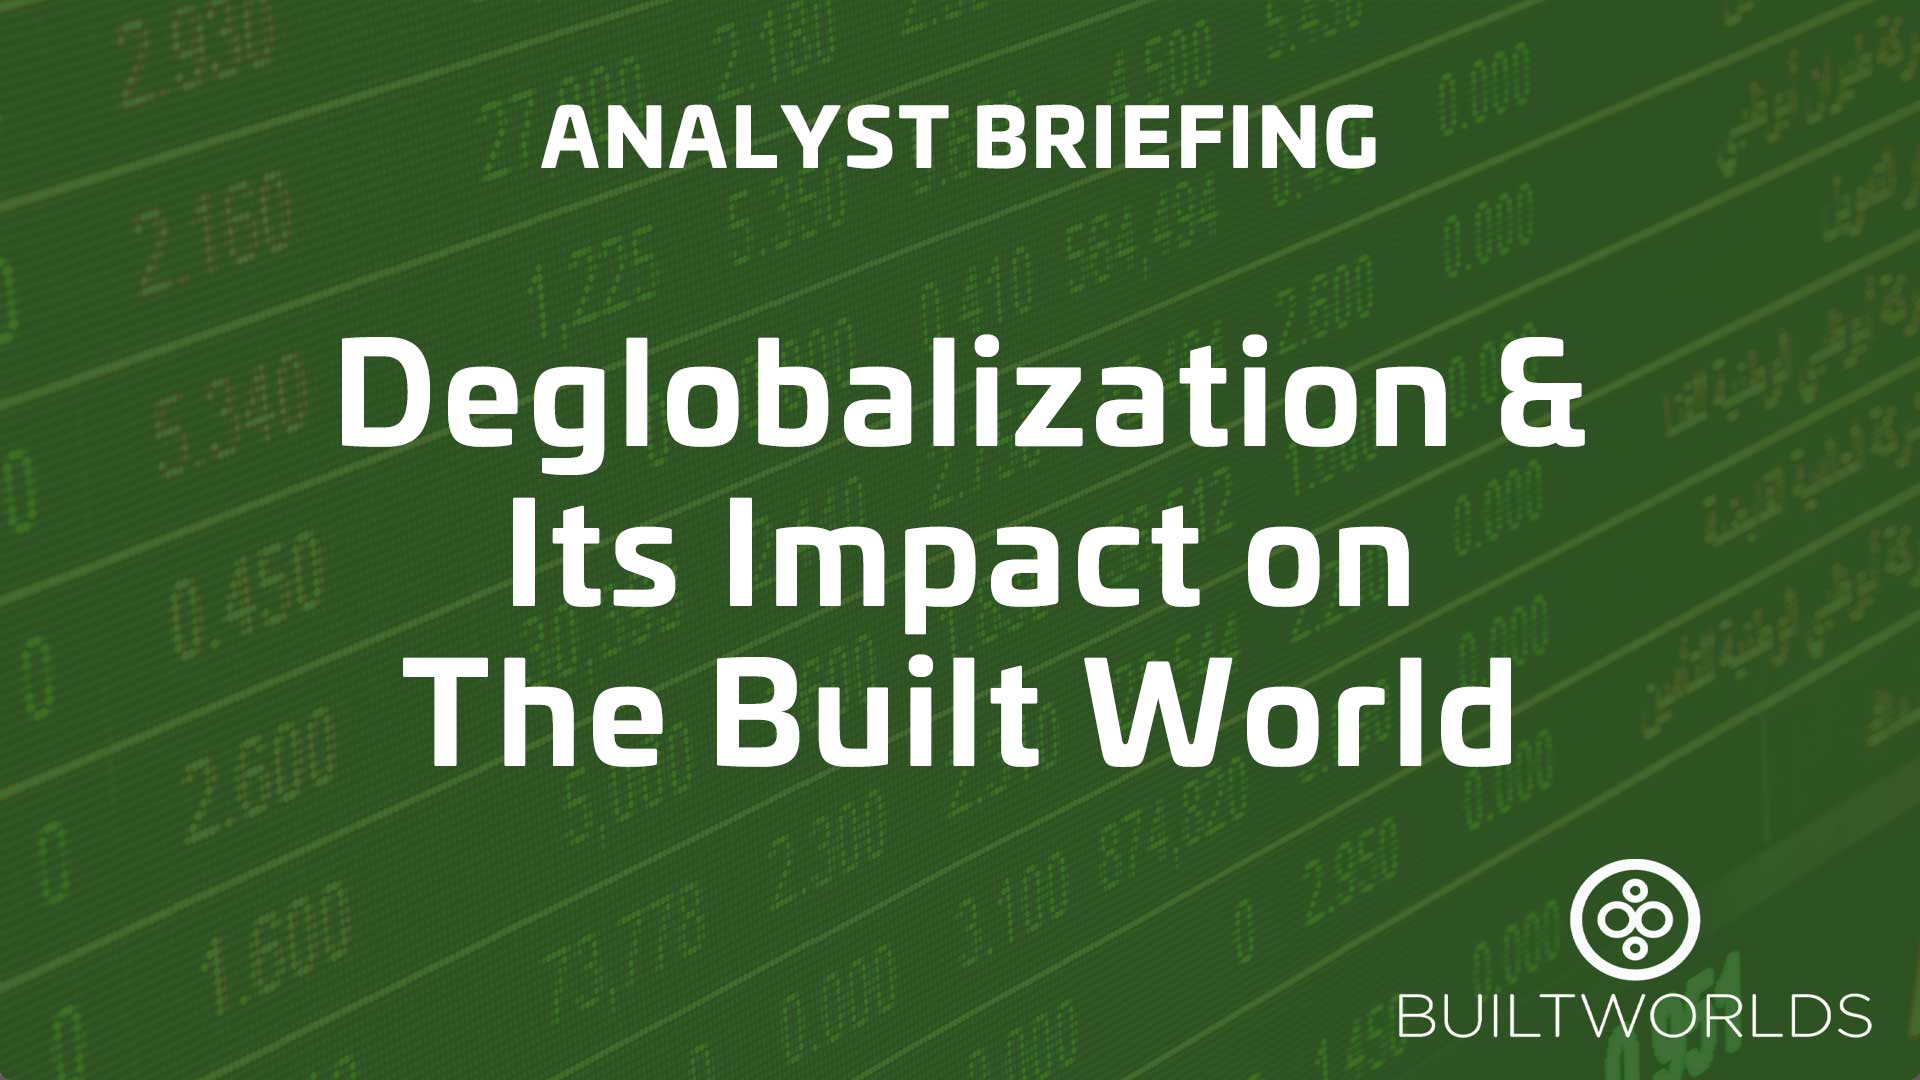 deglobalization&builtworldVCarticle